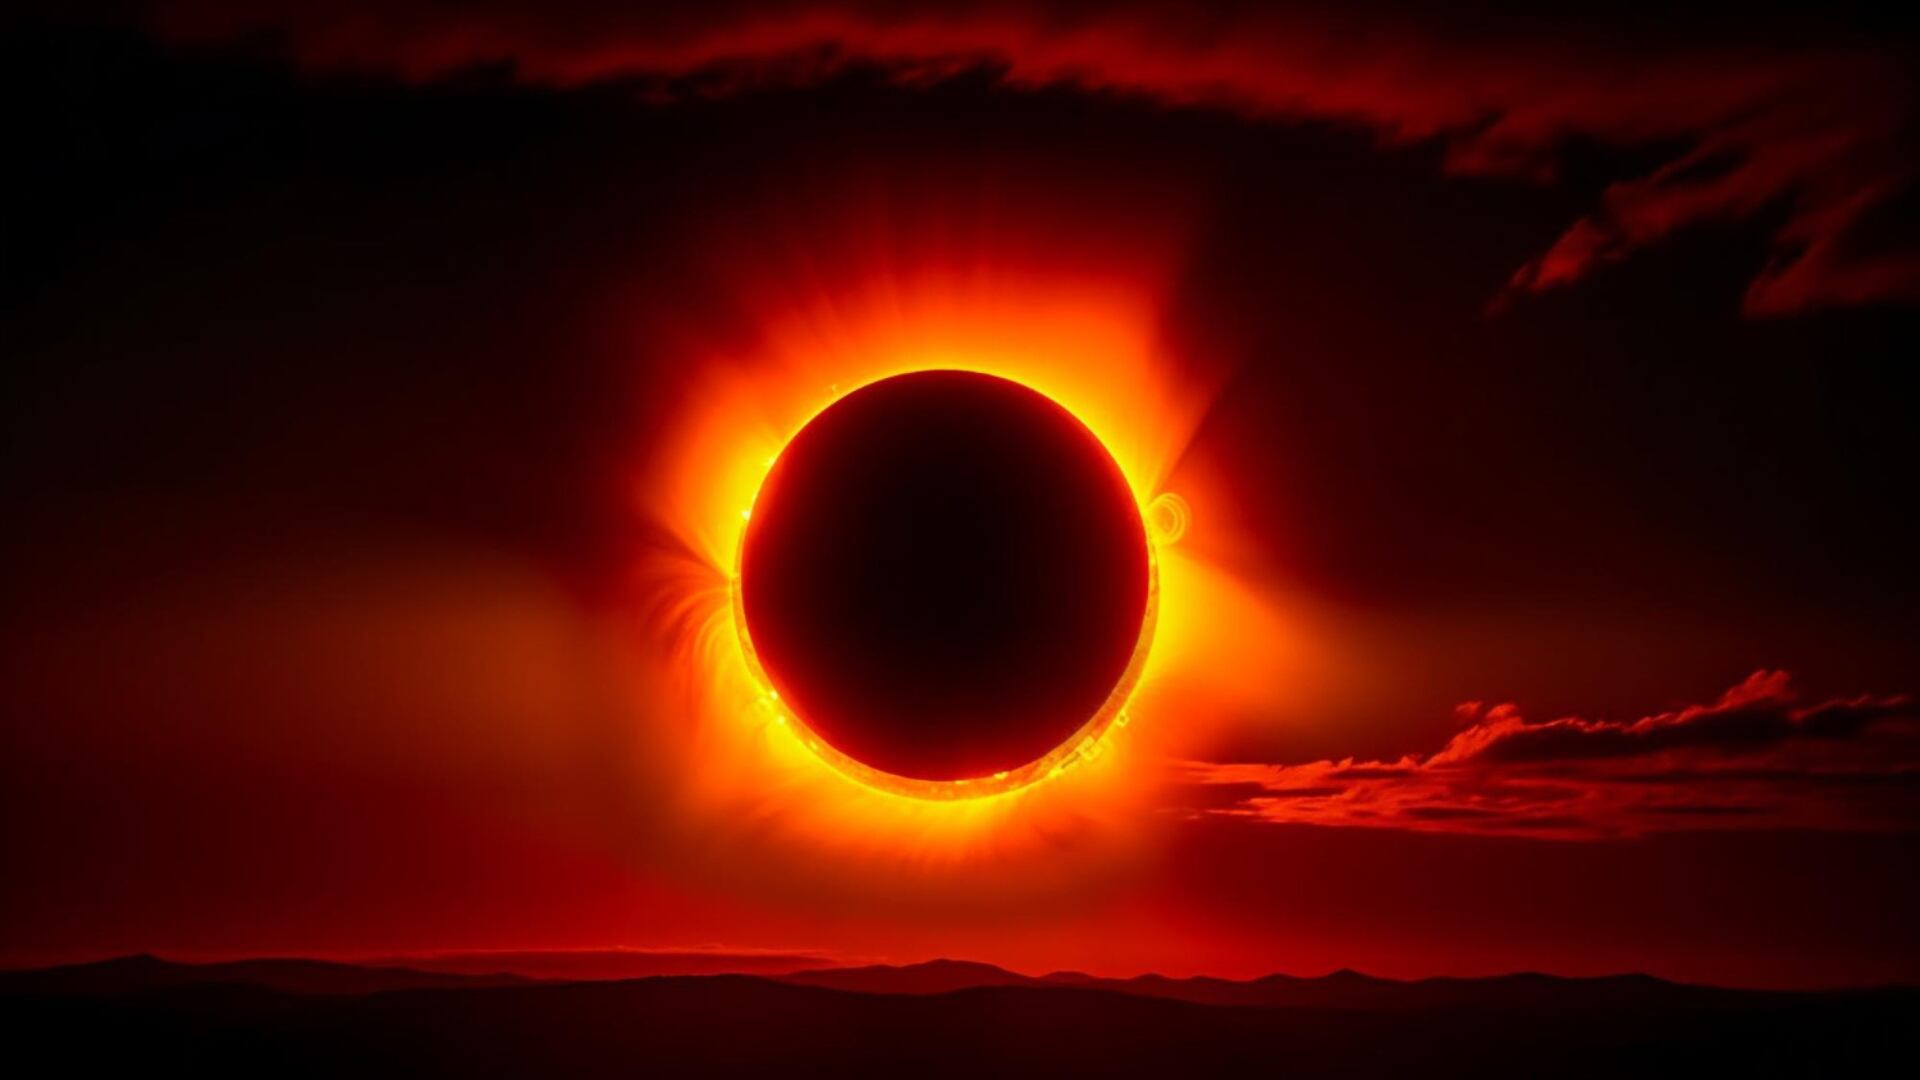 Eclipse solar afectará el zodiaco entero en abril.